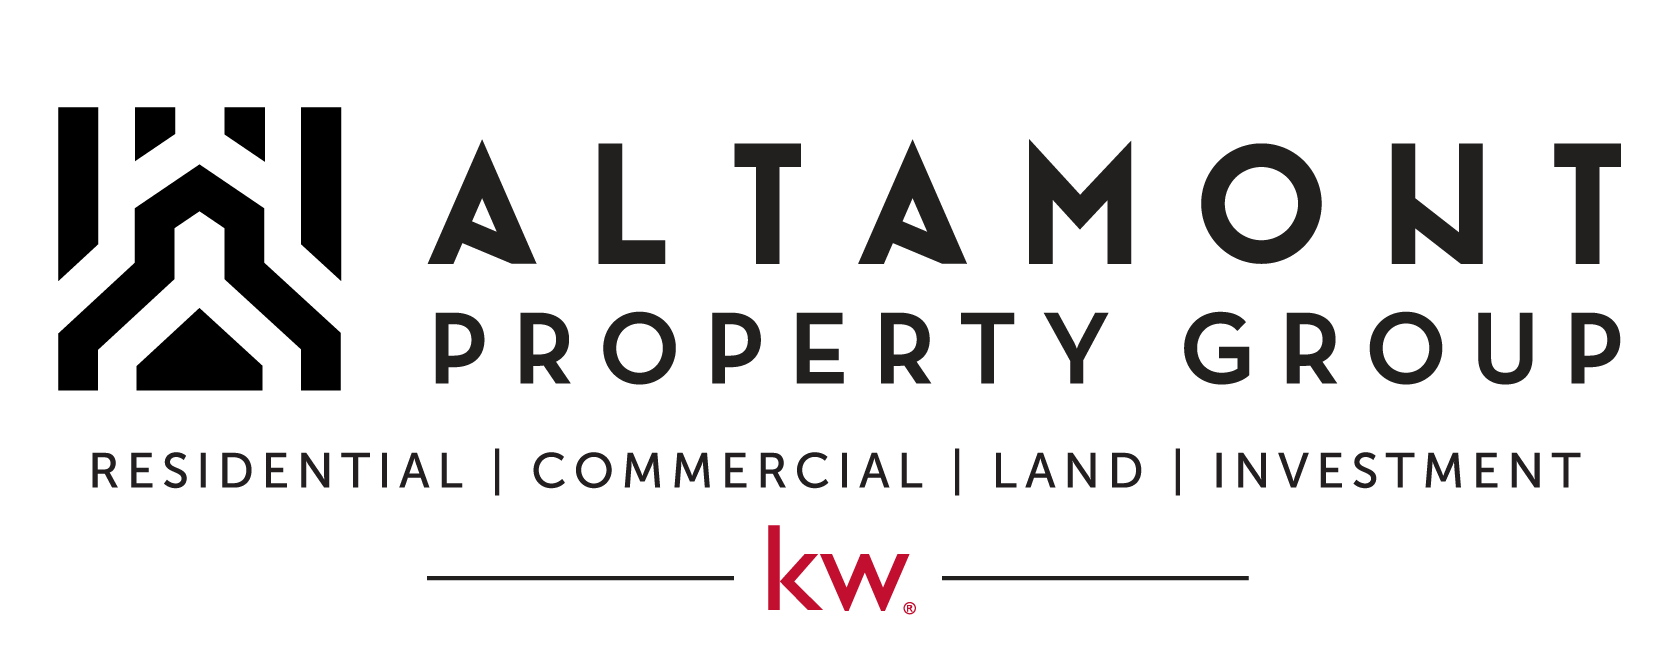 Altamont Property Group full logo